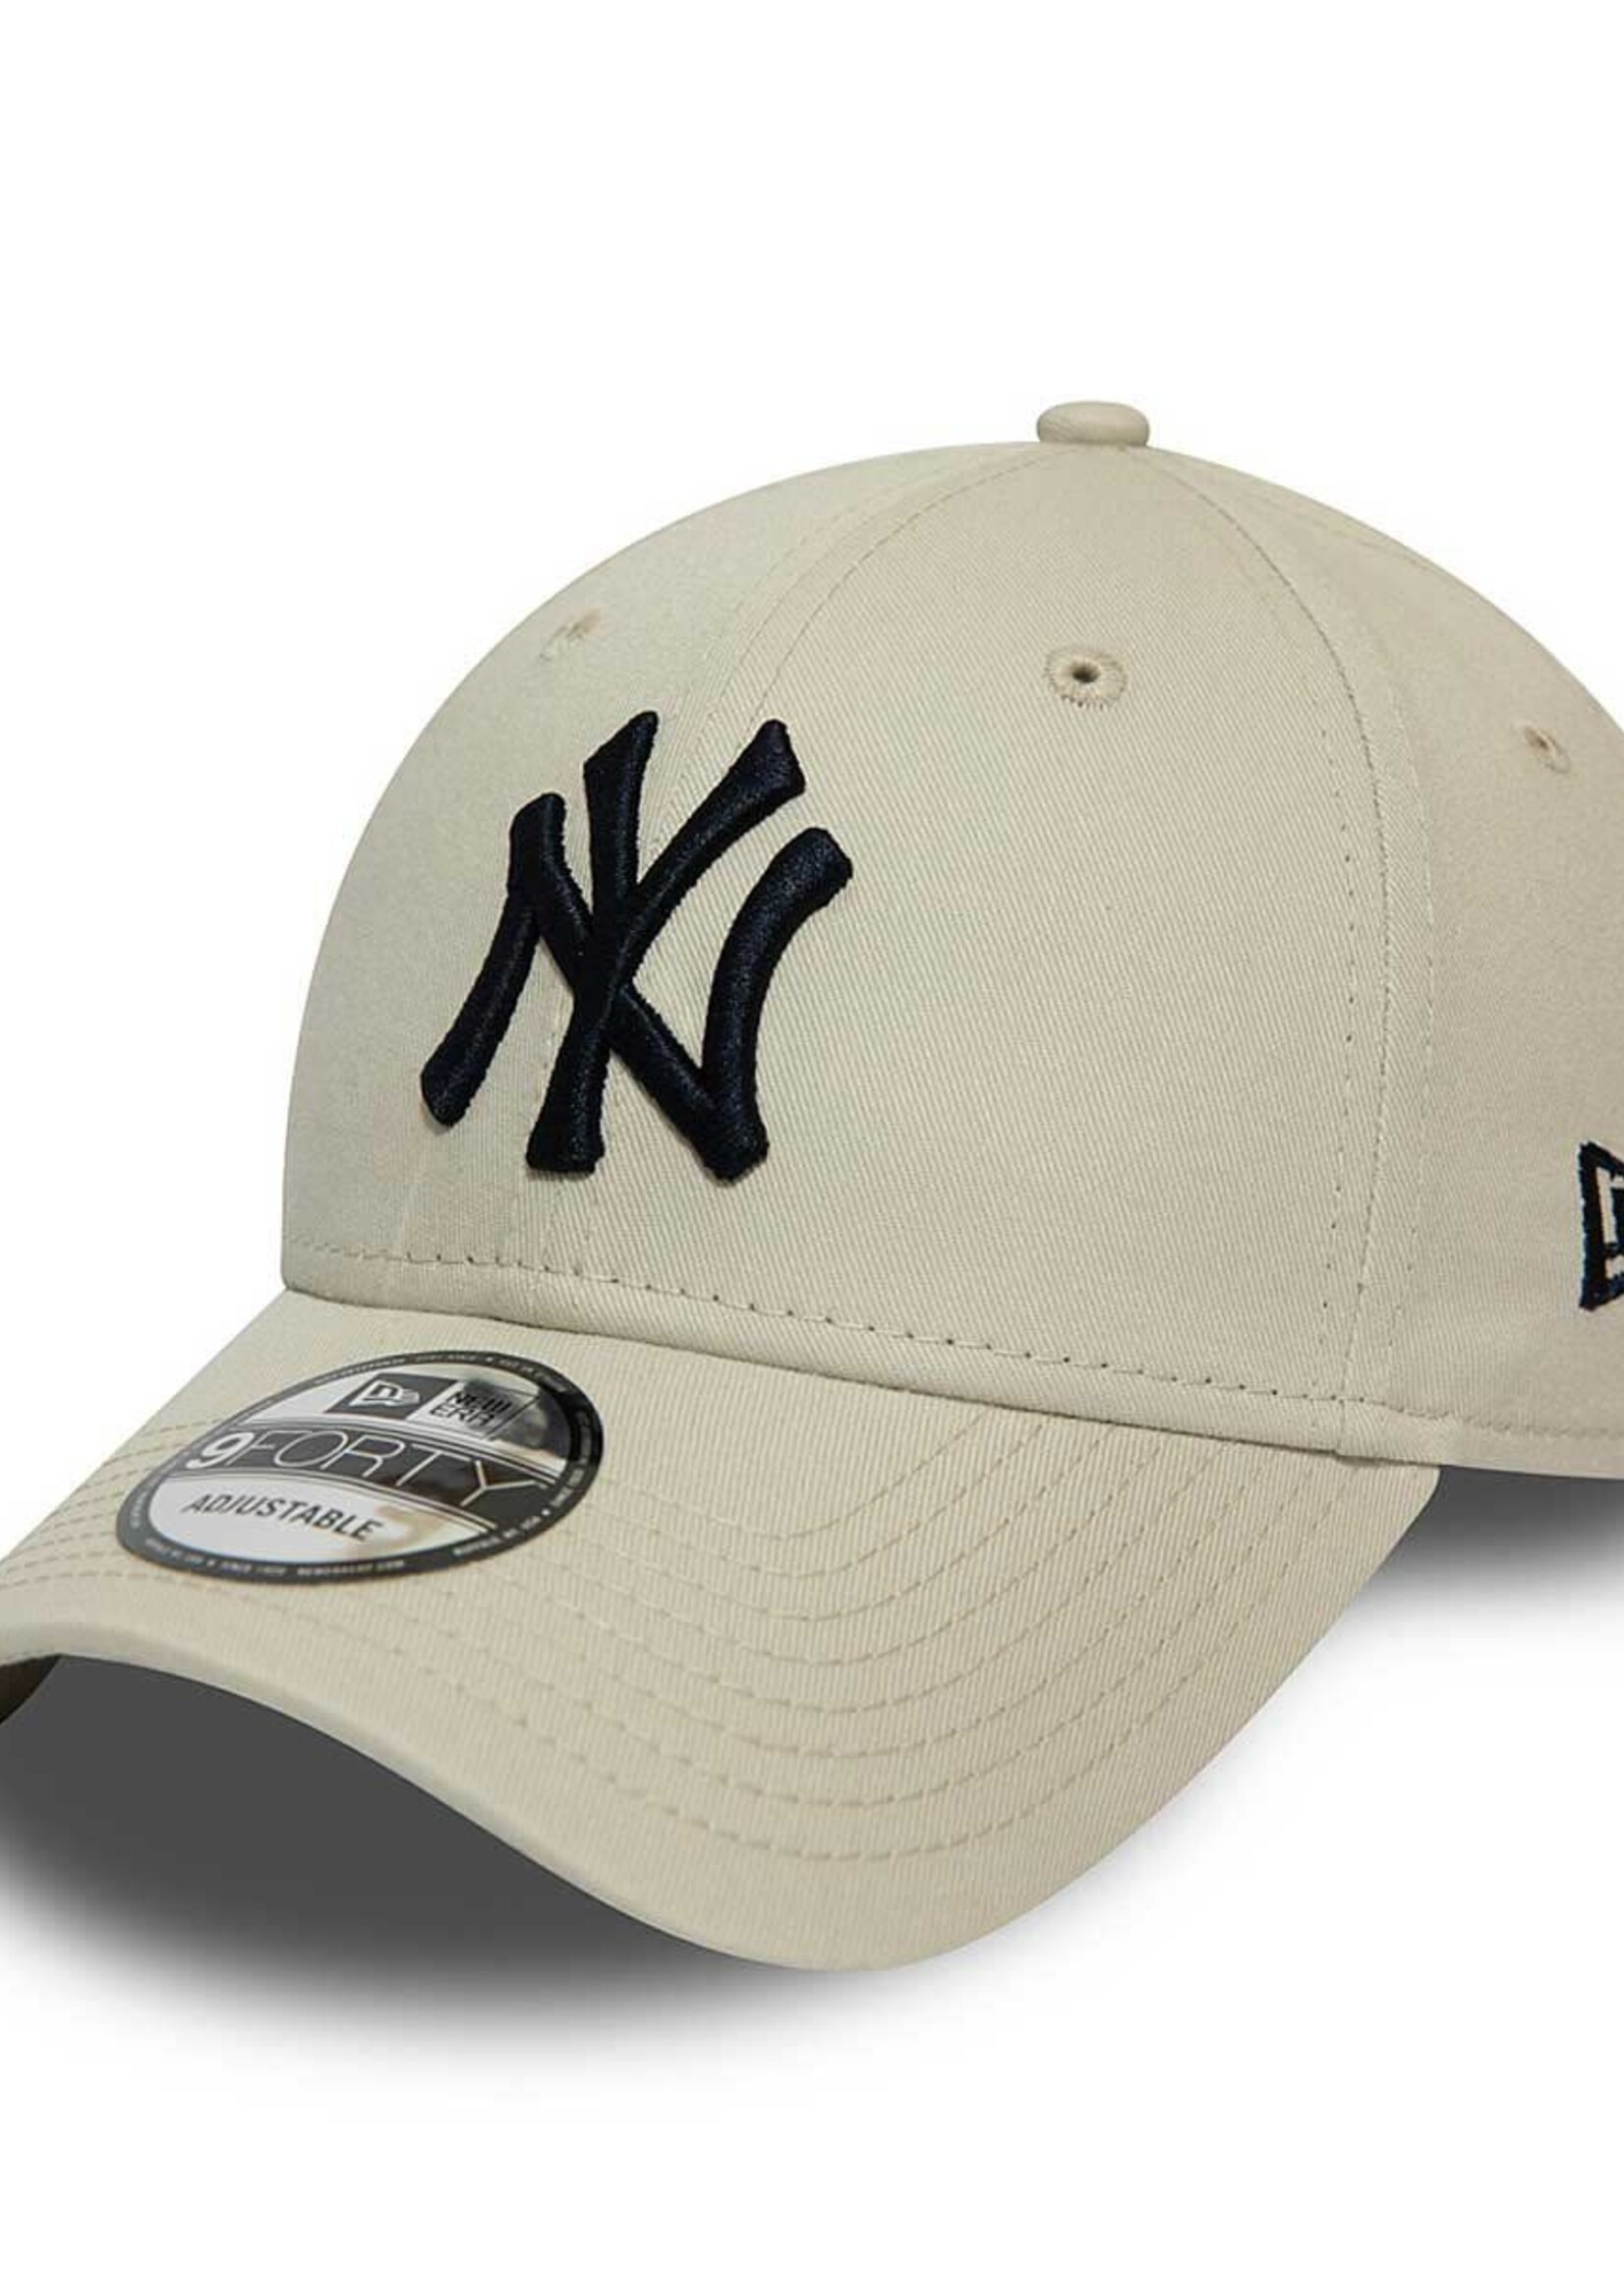 New Era Casquette New York Yankees MLB 9Forty Crème Noir